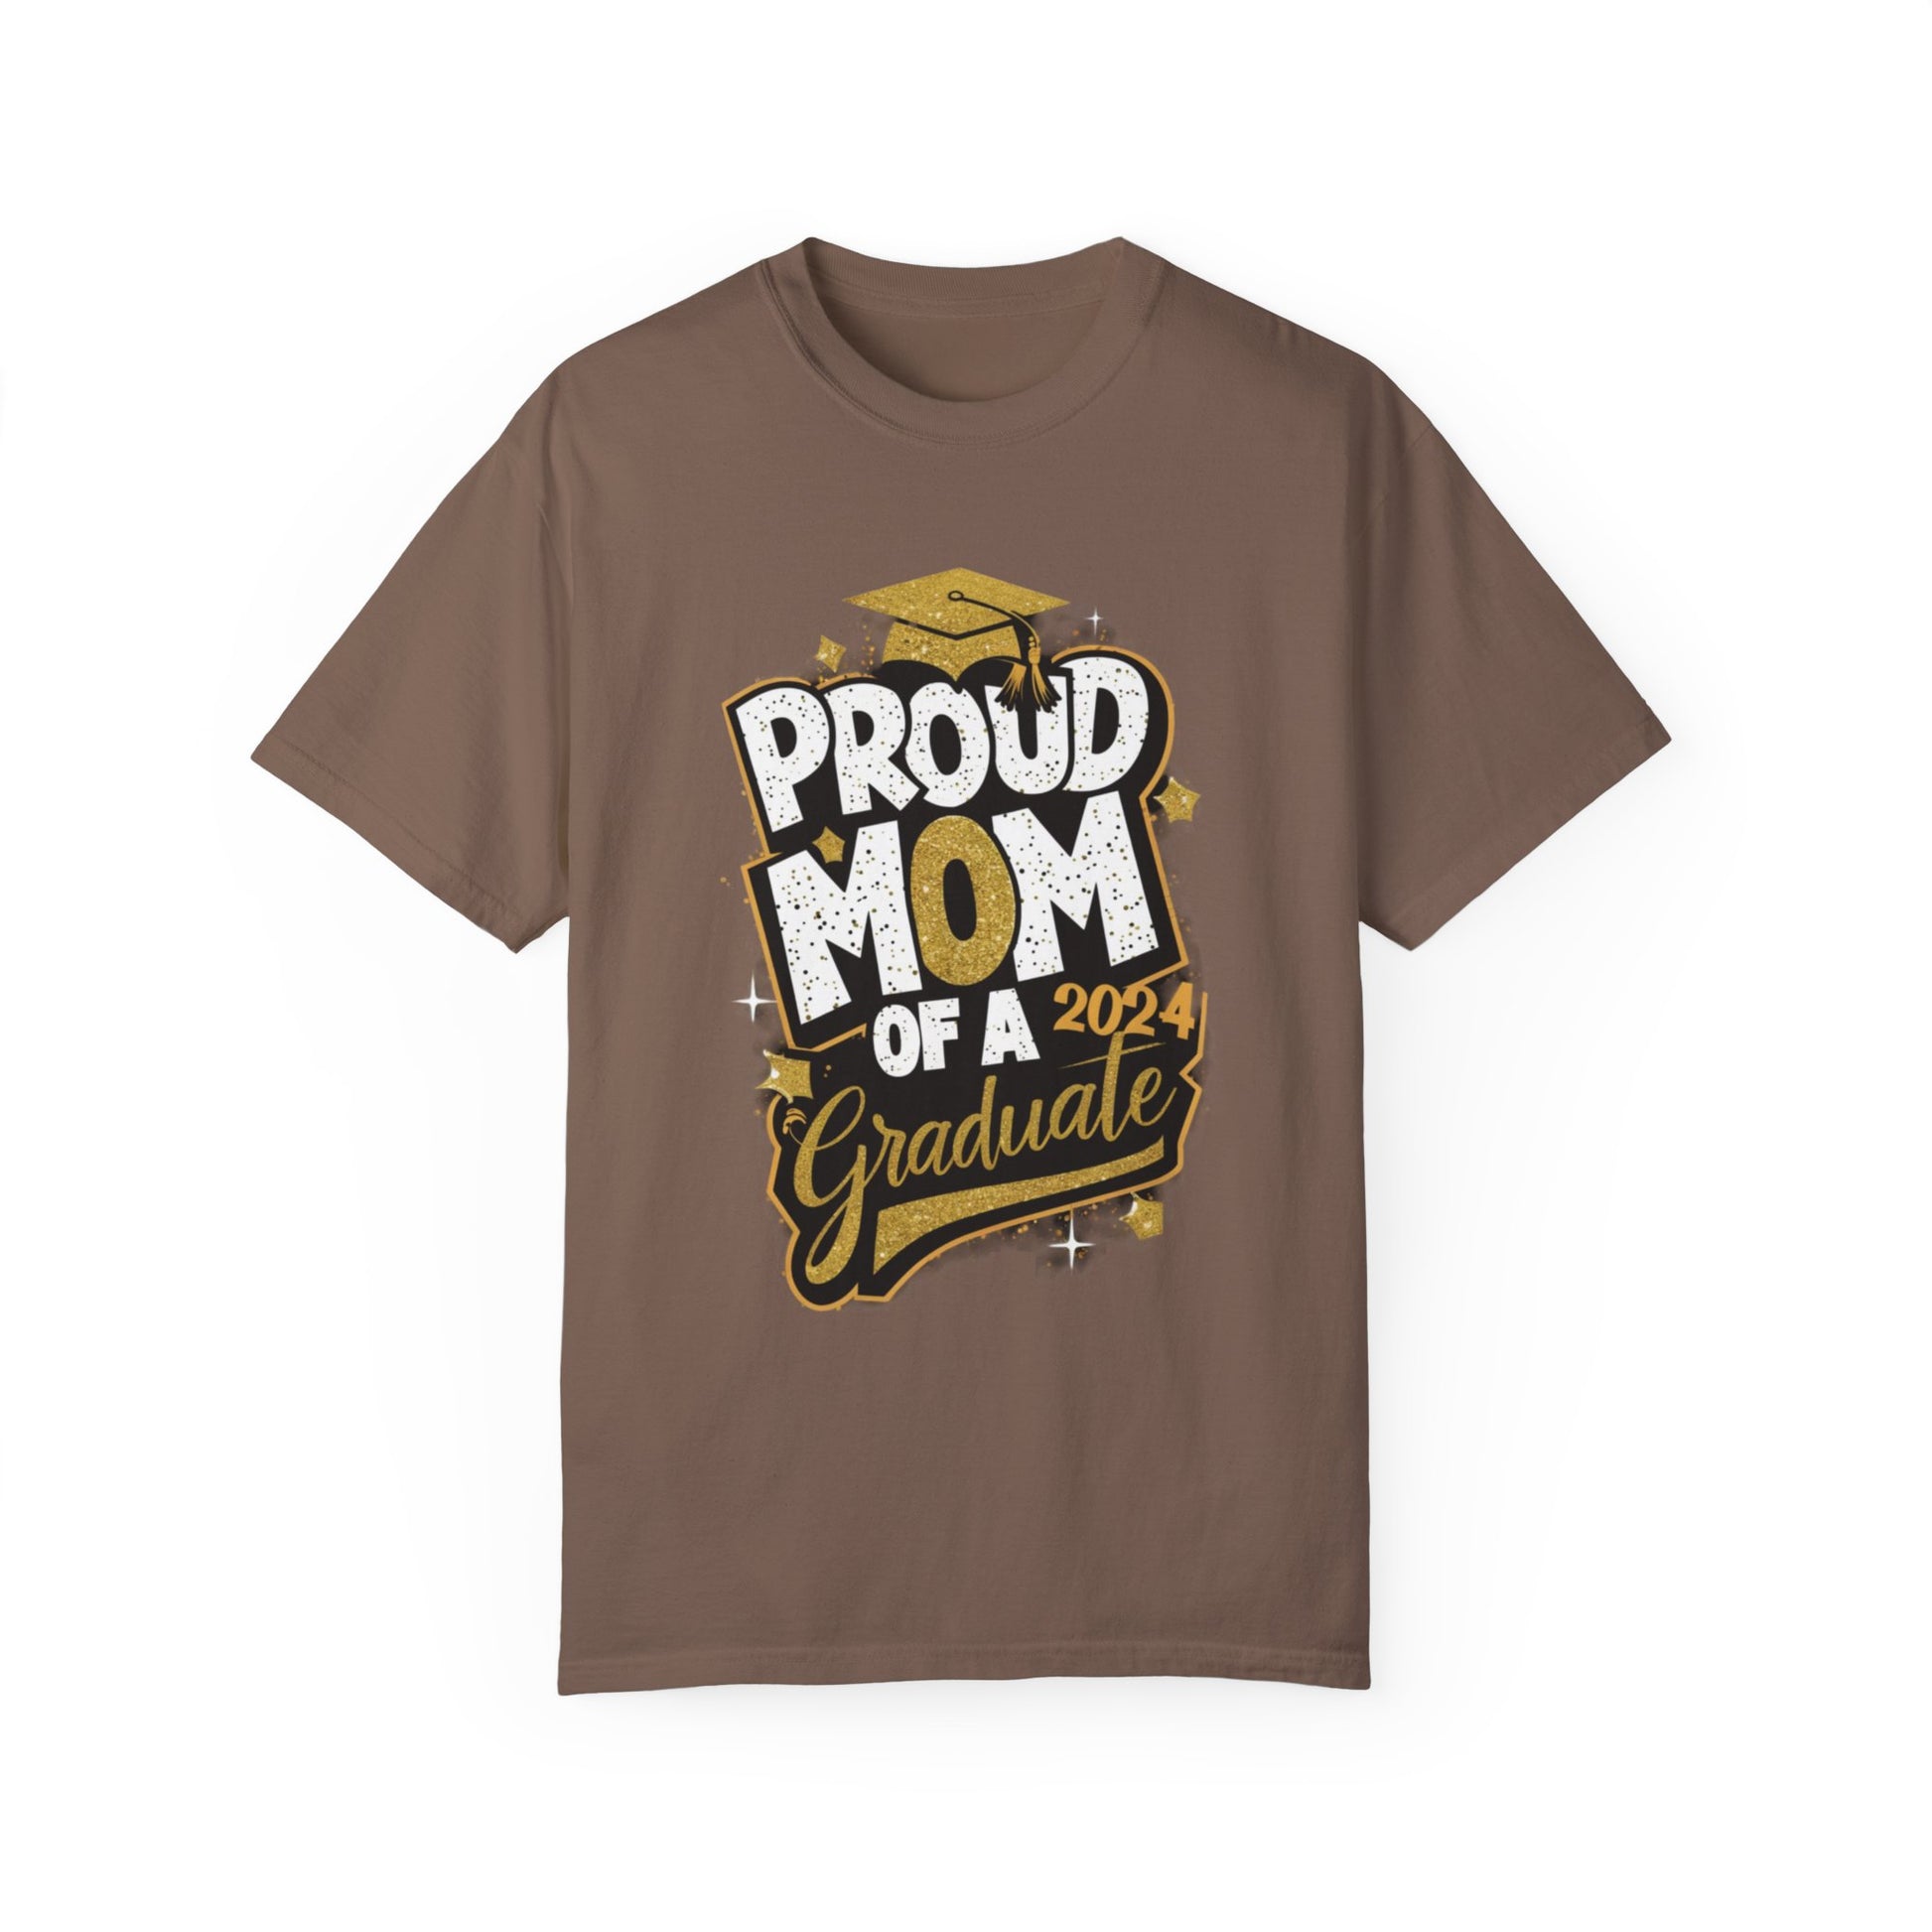 Proud Mom of a 2024 Graduate Unisex Garment-dyed T-shirt Cotton Funny Humorous Graphic Soft Premium Unisex Men Women Espresso T-shirt Birthday Gift-15